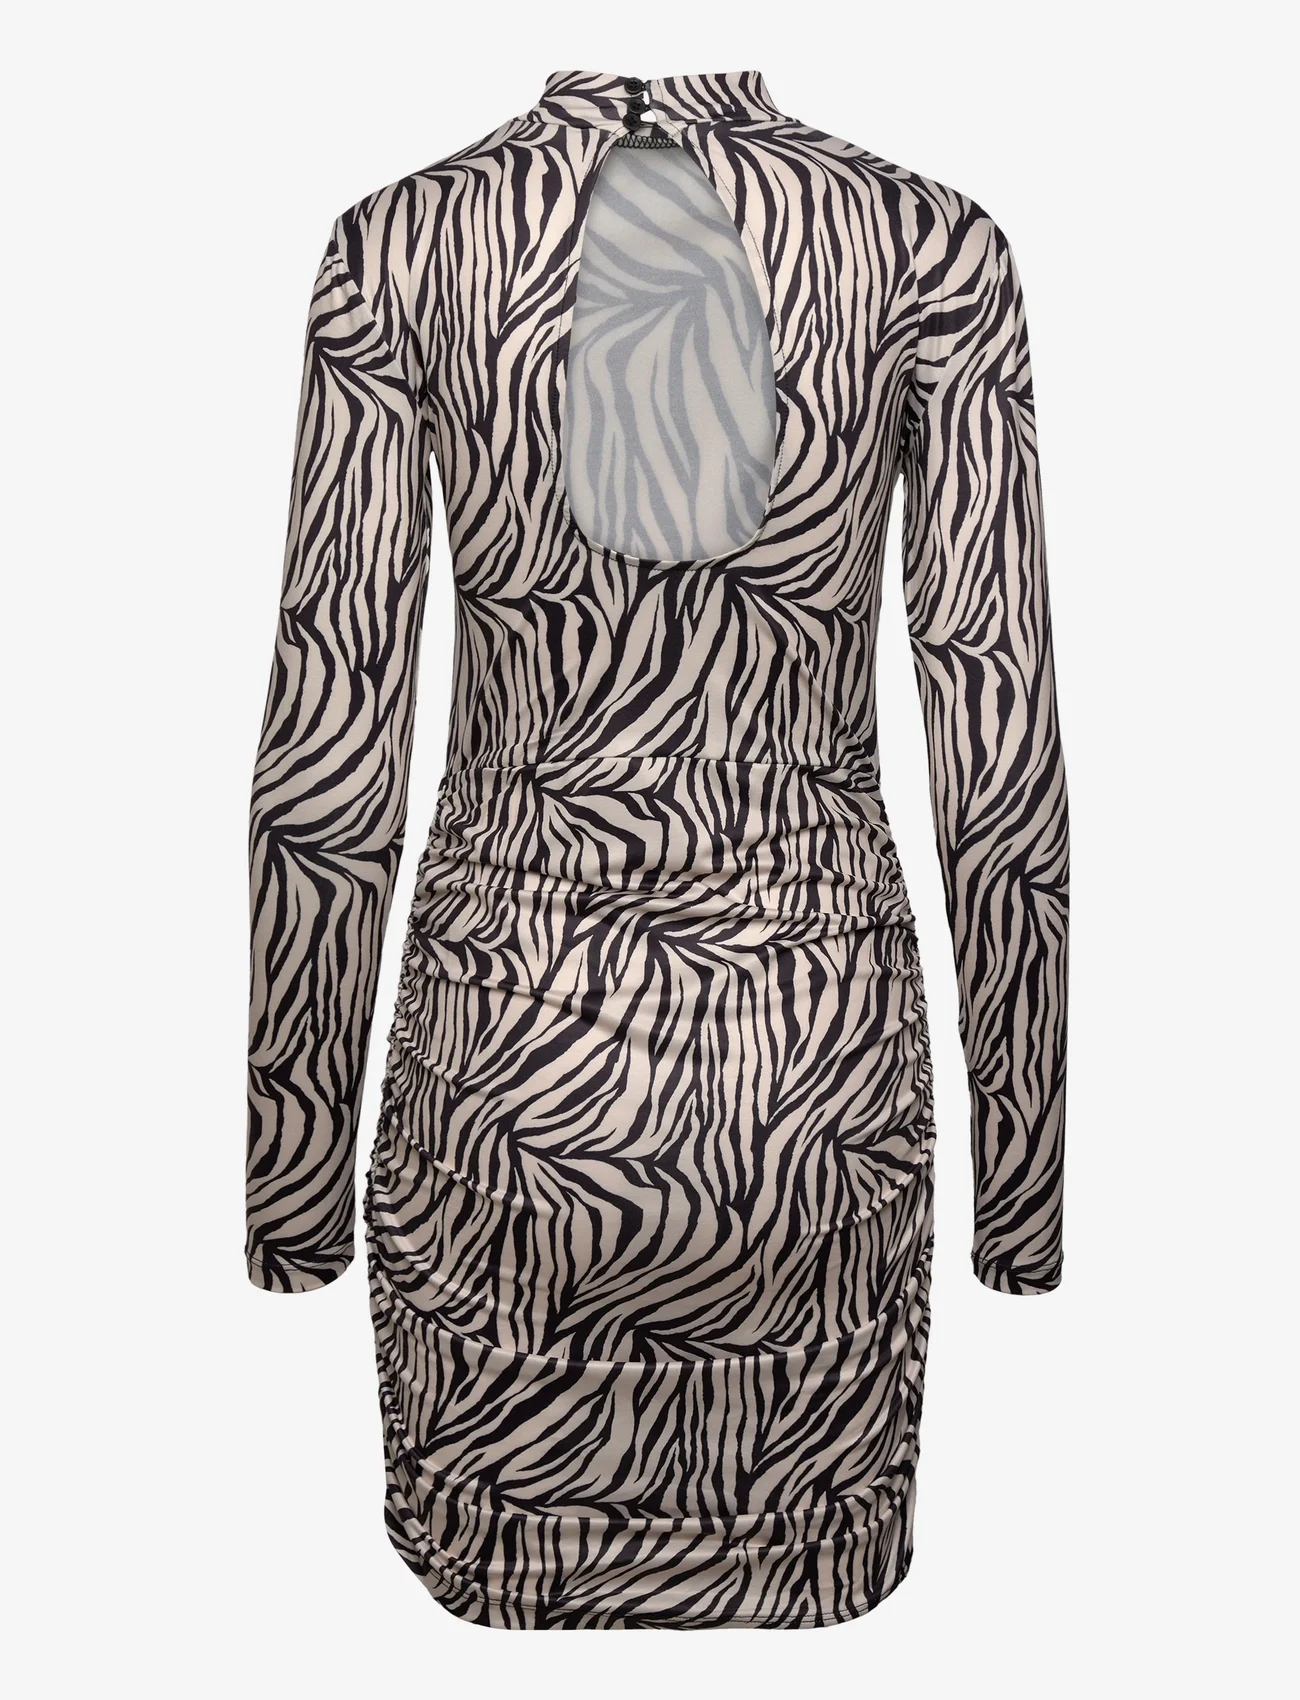 bzr - Regina Molisa dress - etuikleider - zebra print - 1